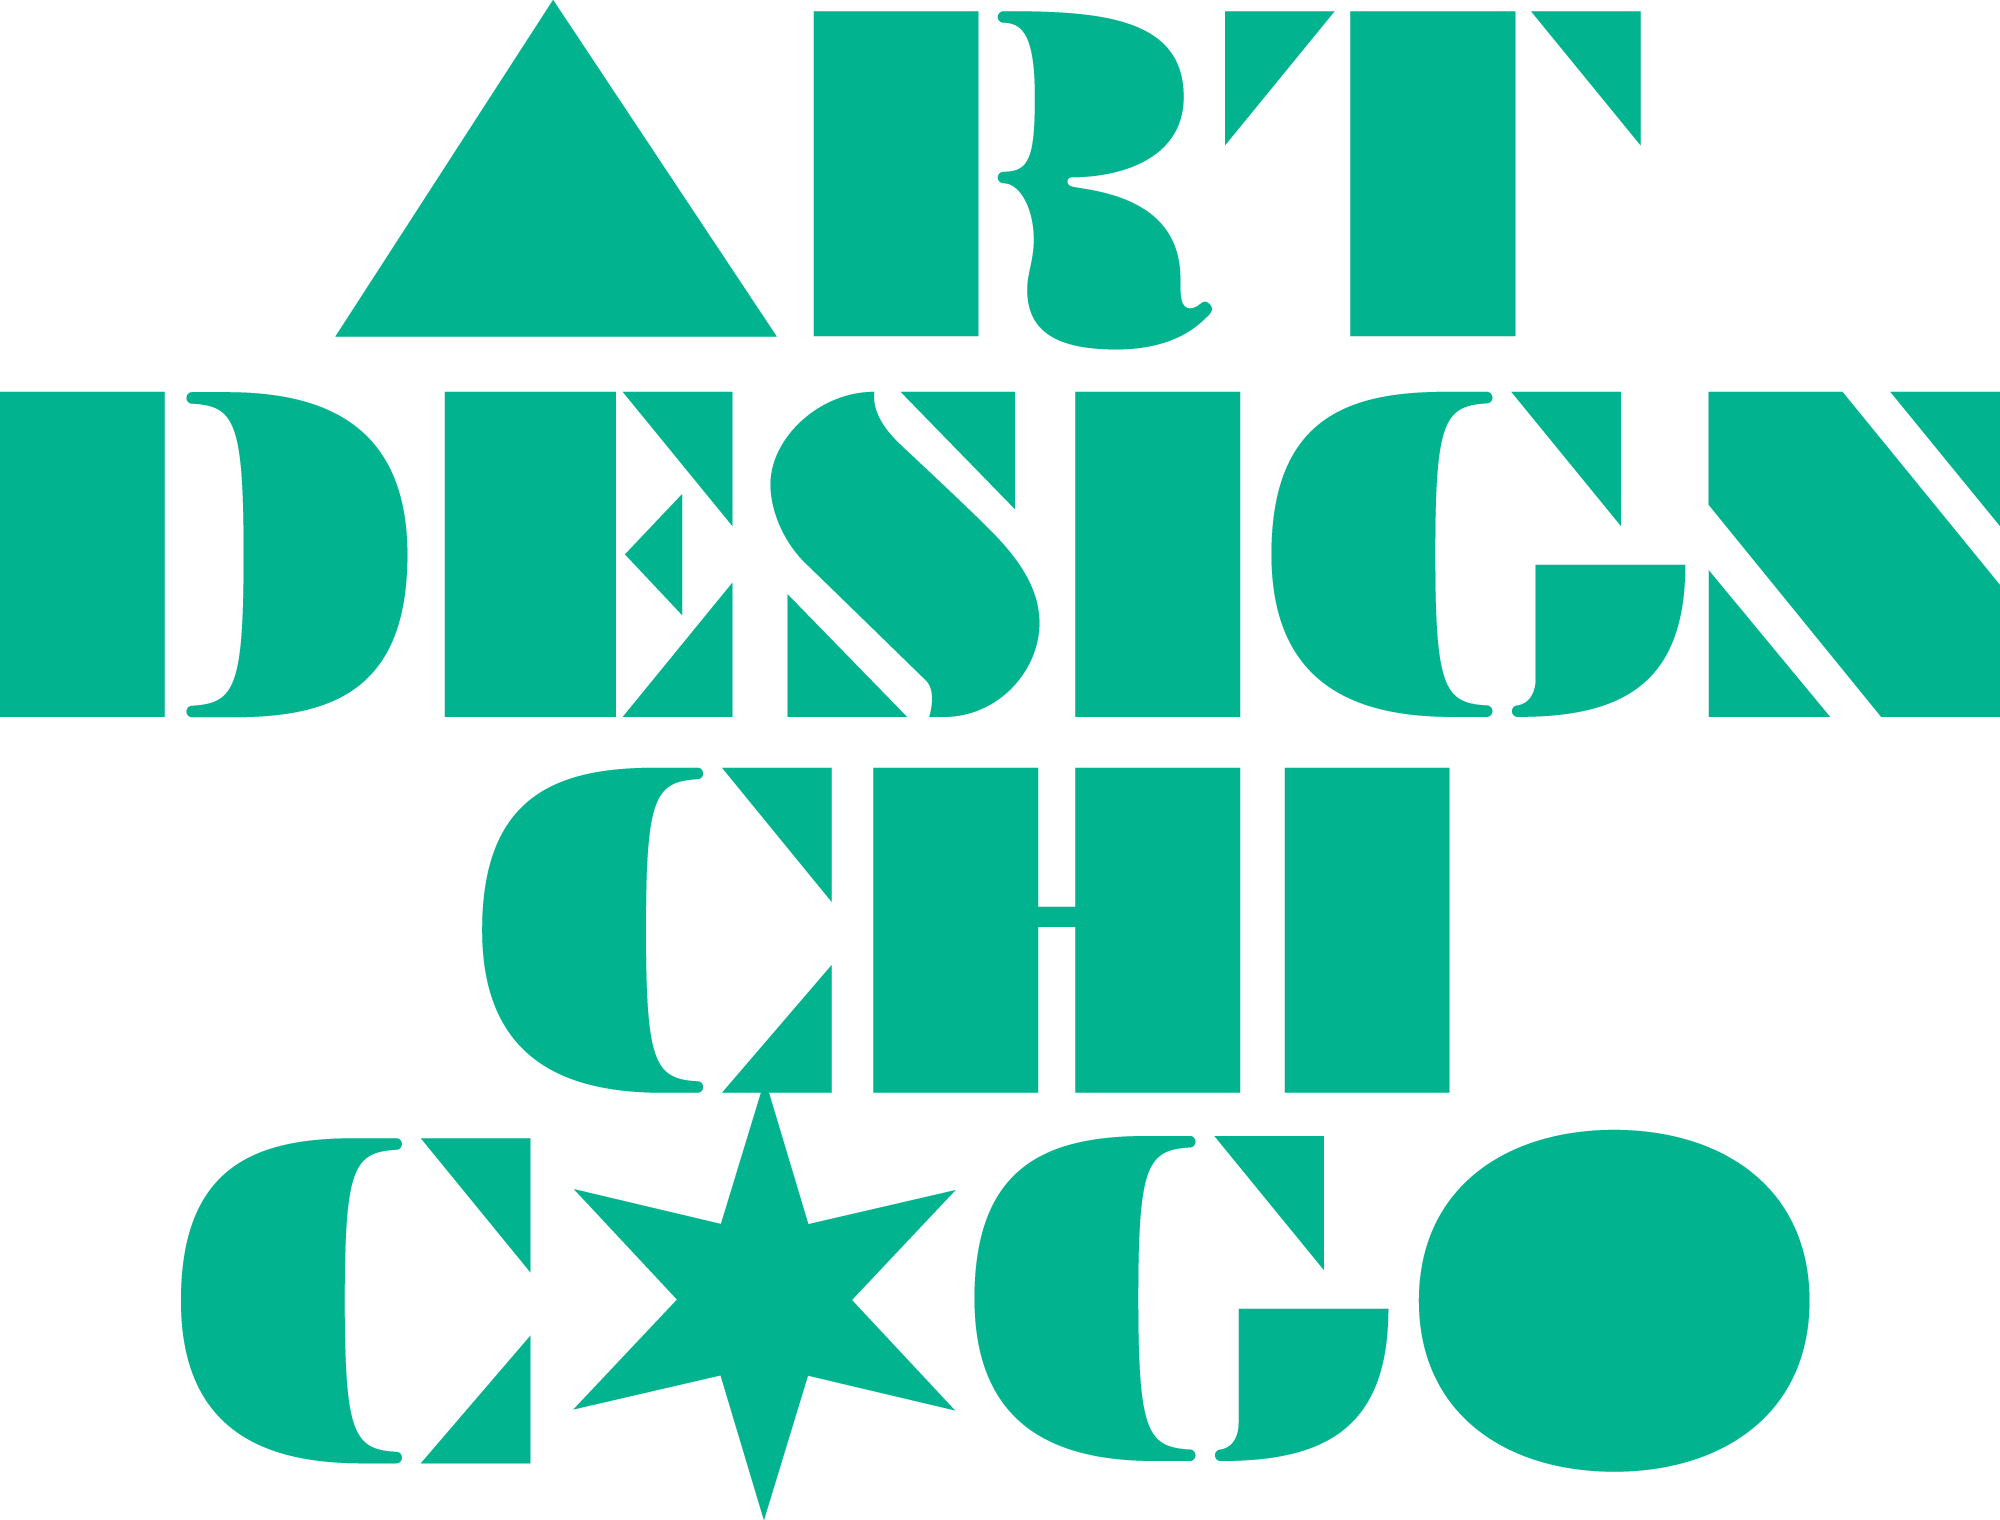 Green logo that says Art Design Chicago.